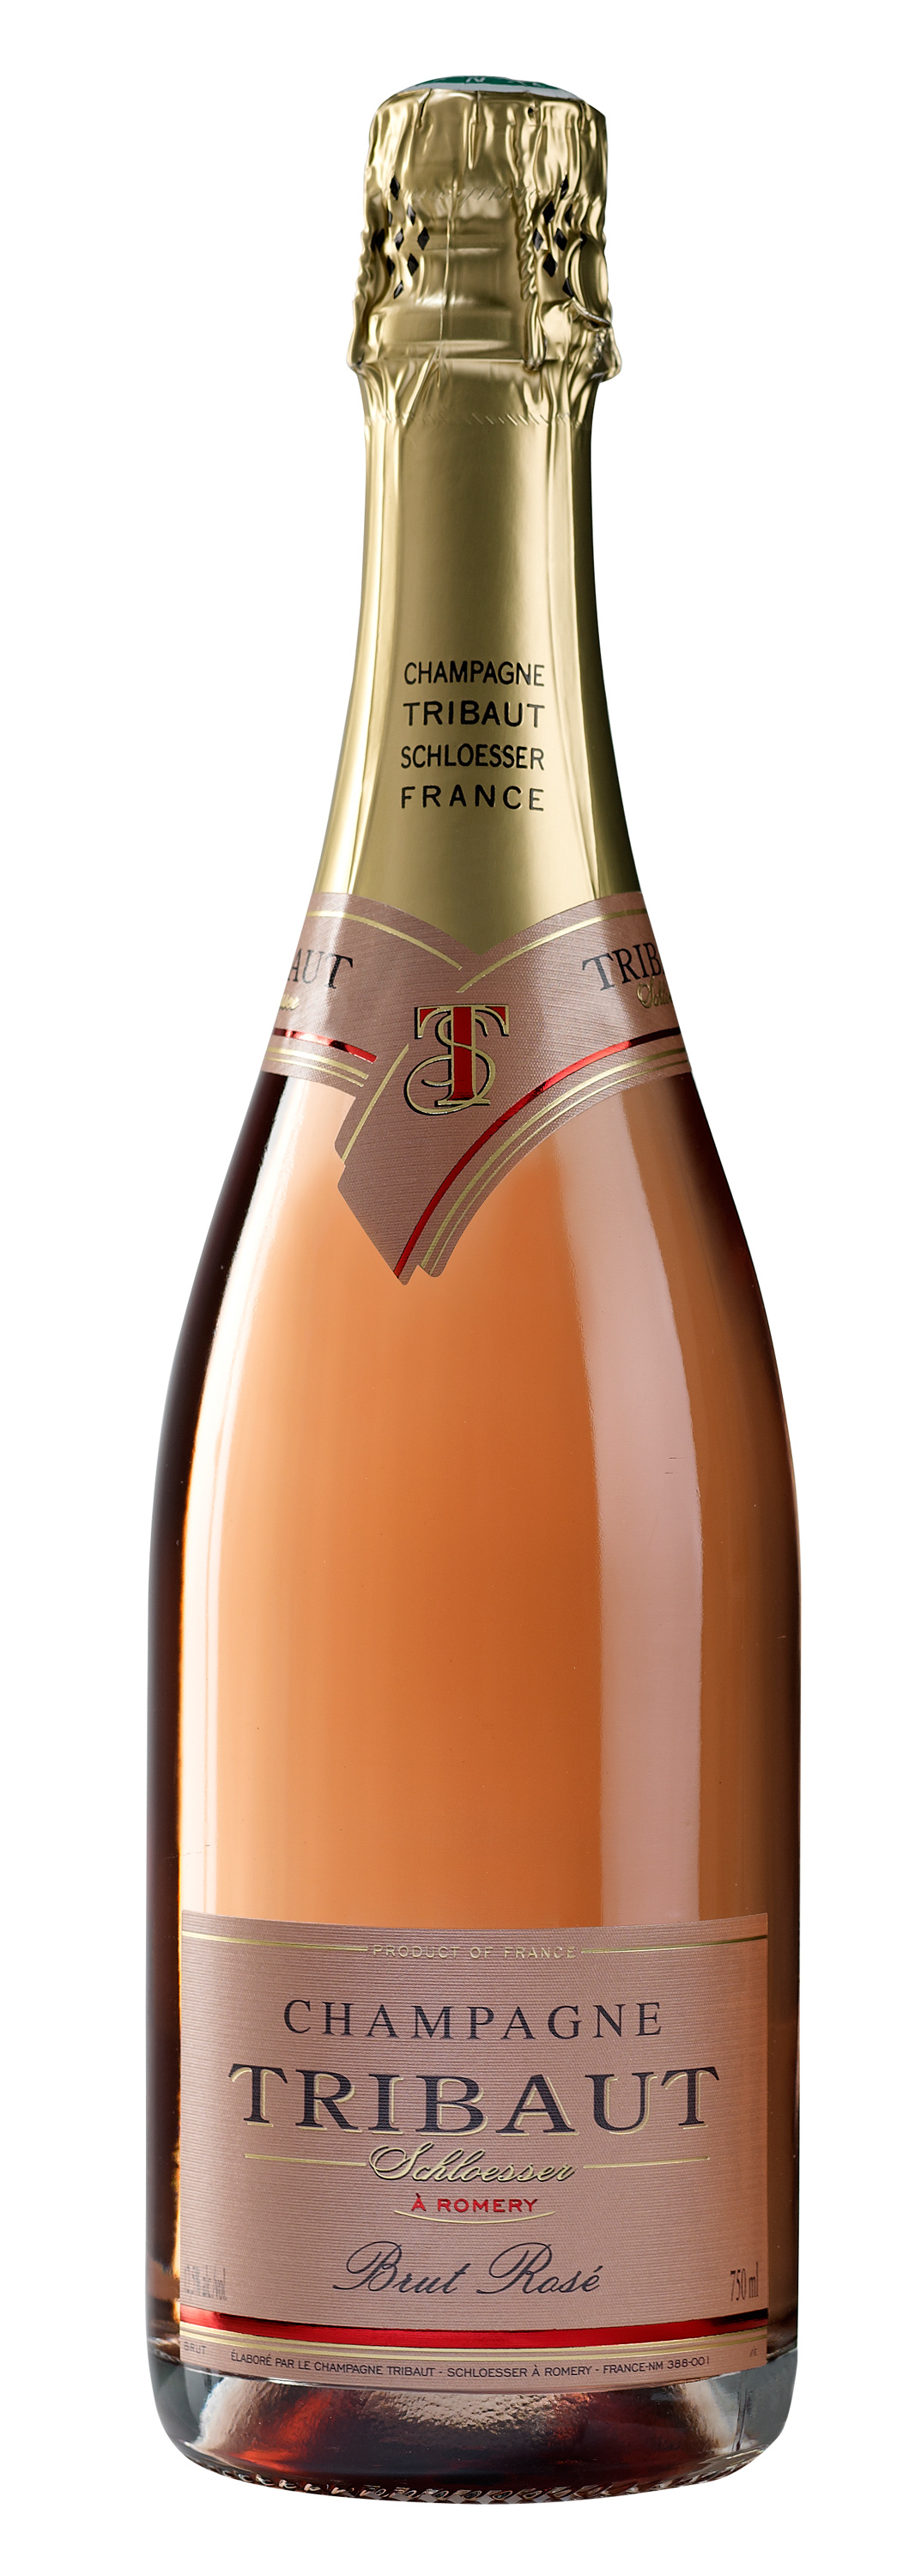 NV Champagne Tribaut Rose Brut 8 Terroirs - click image for full description